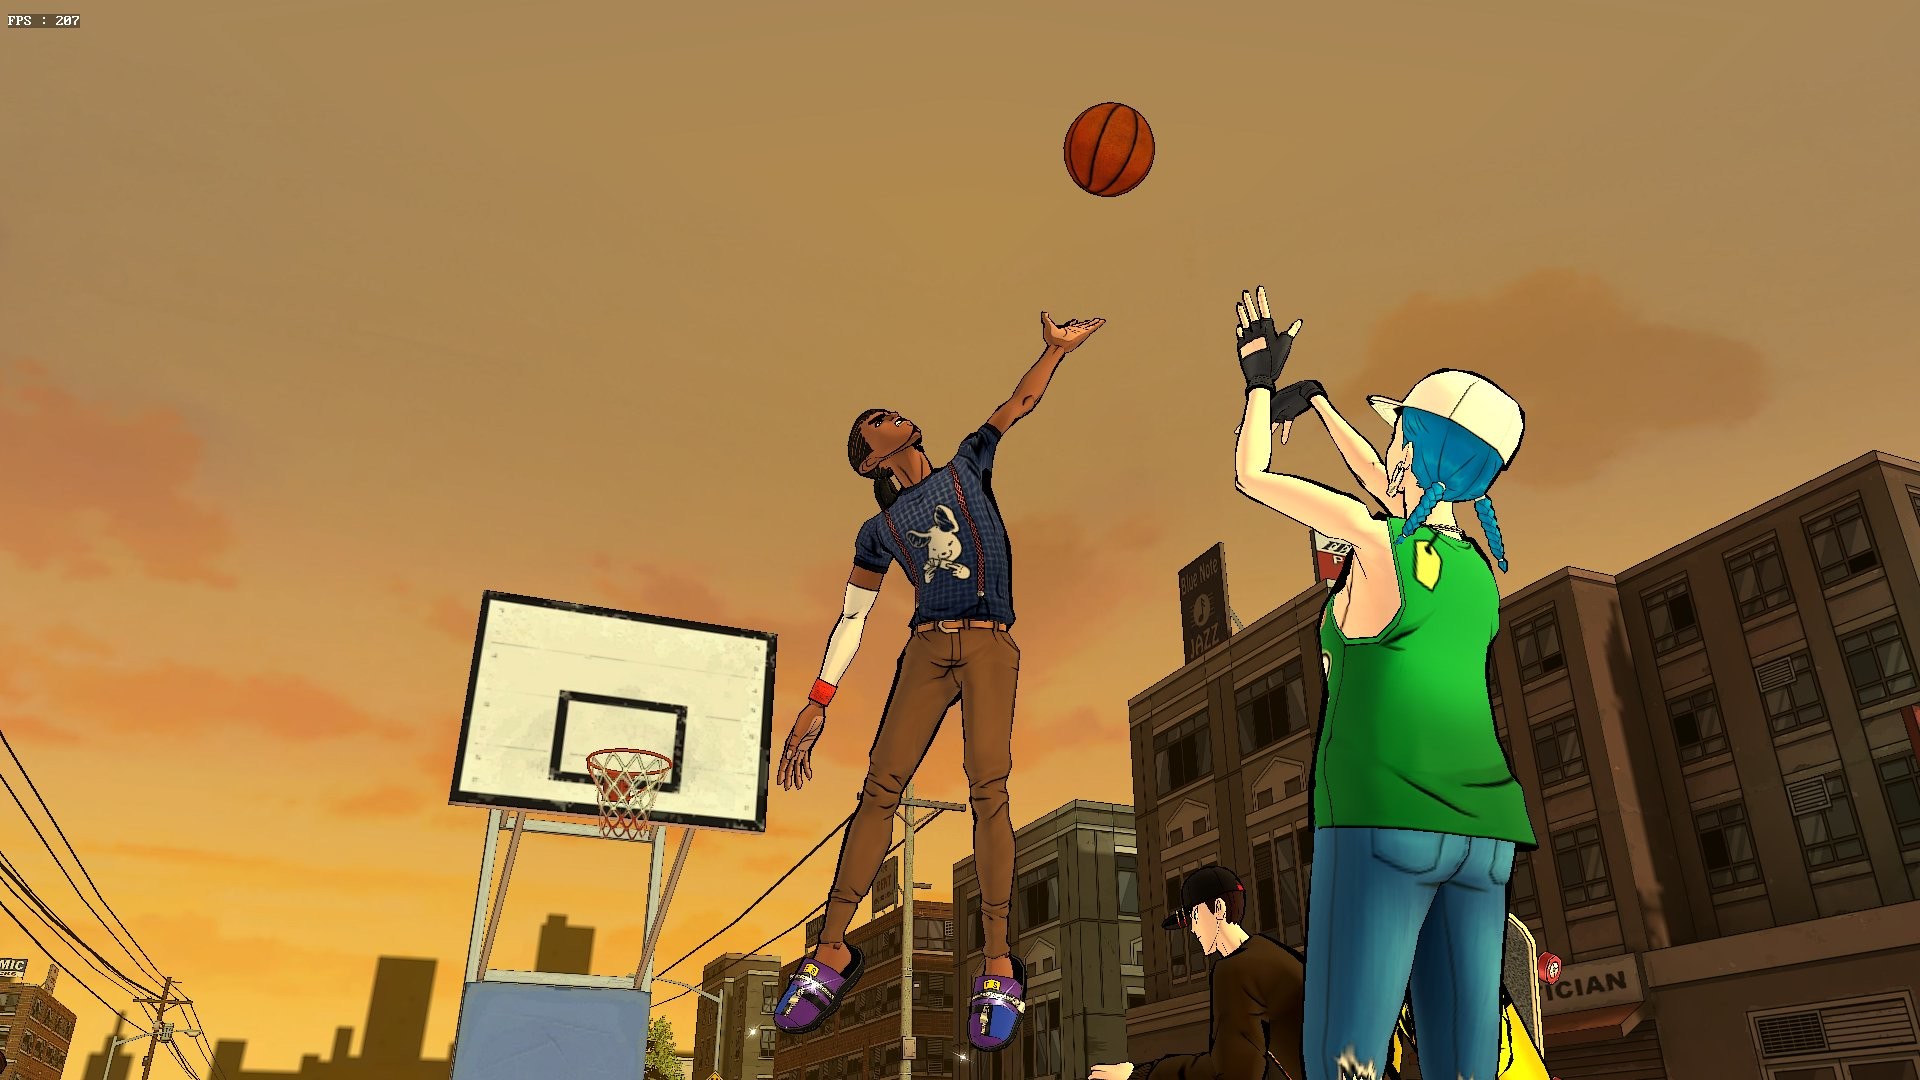 street basketball